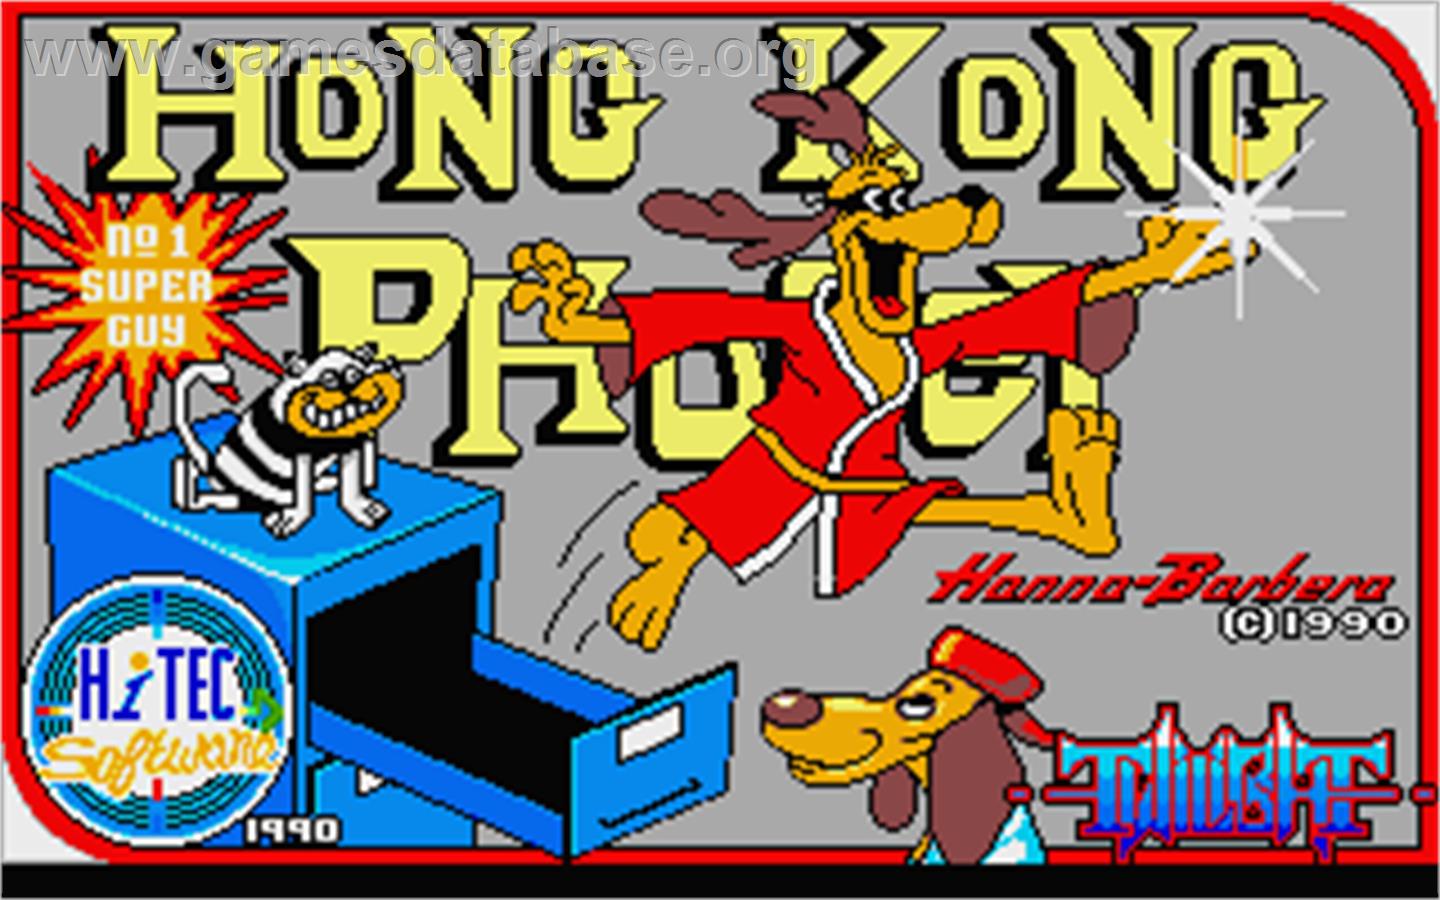 Hong Kong Phooey: No.1 Super Guy - Atari ST - Artwork - Title Screen